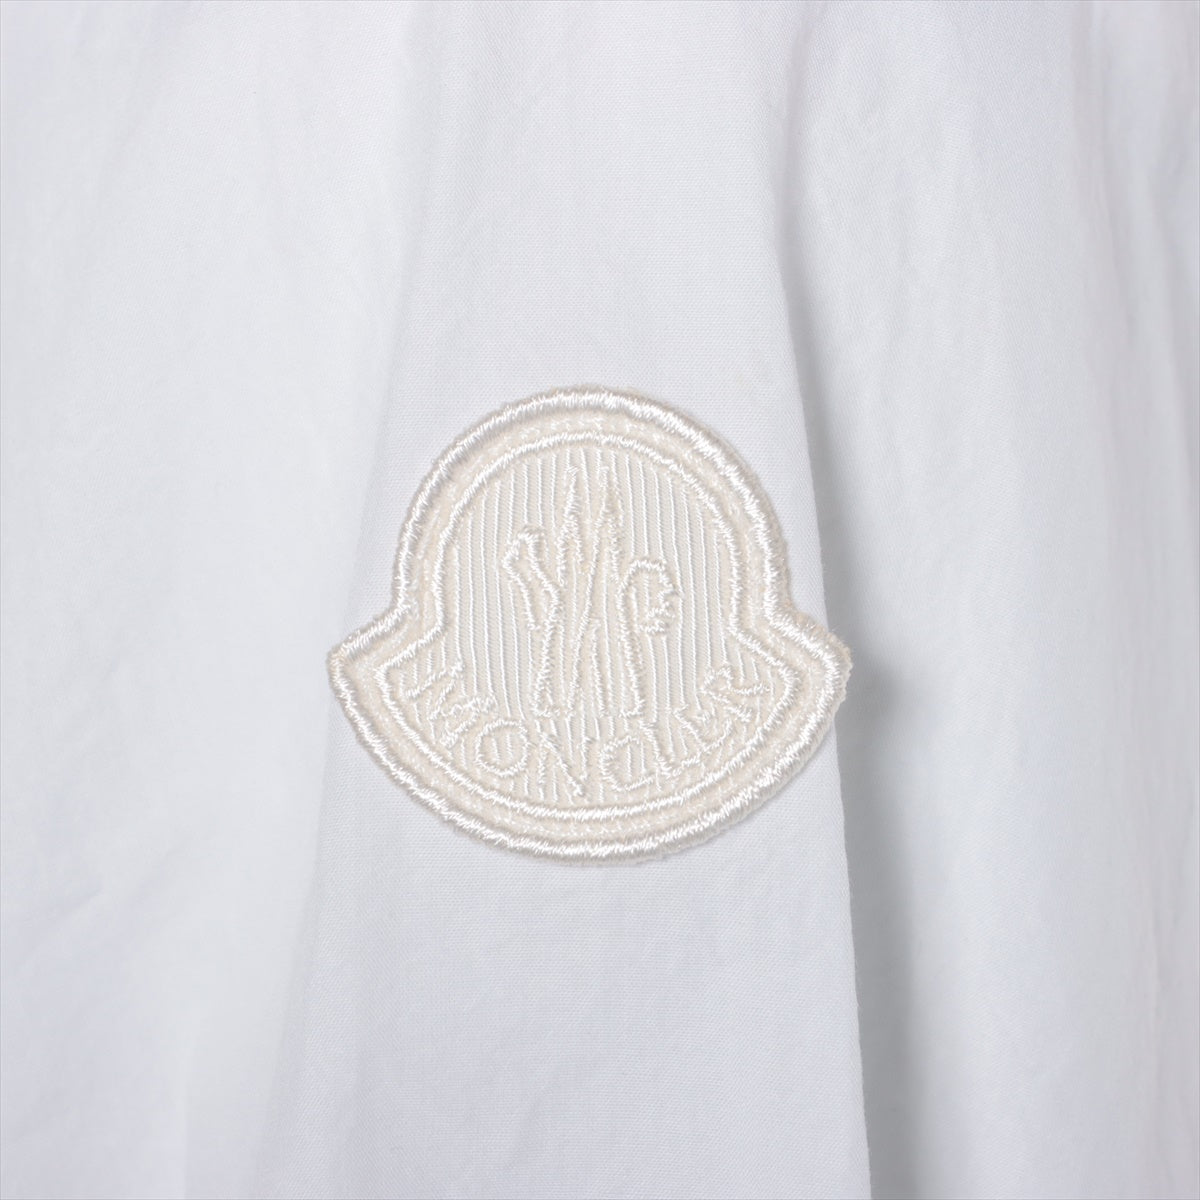 Moncler ABITO 22 years Cotton Shirt dress 38 Ladies' White  I10932G00017